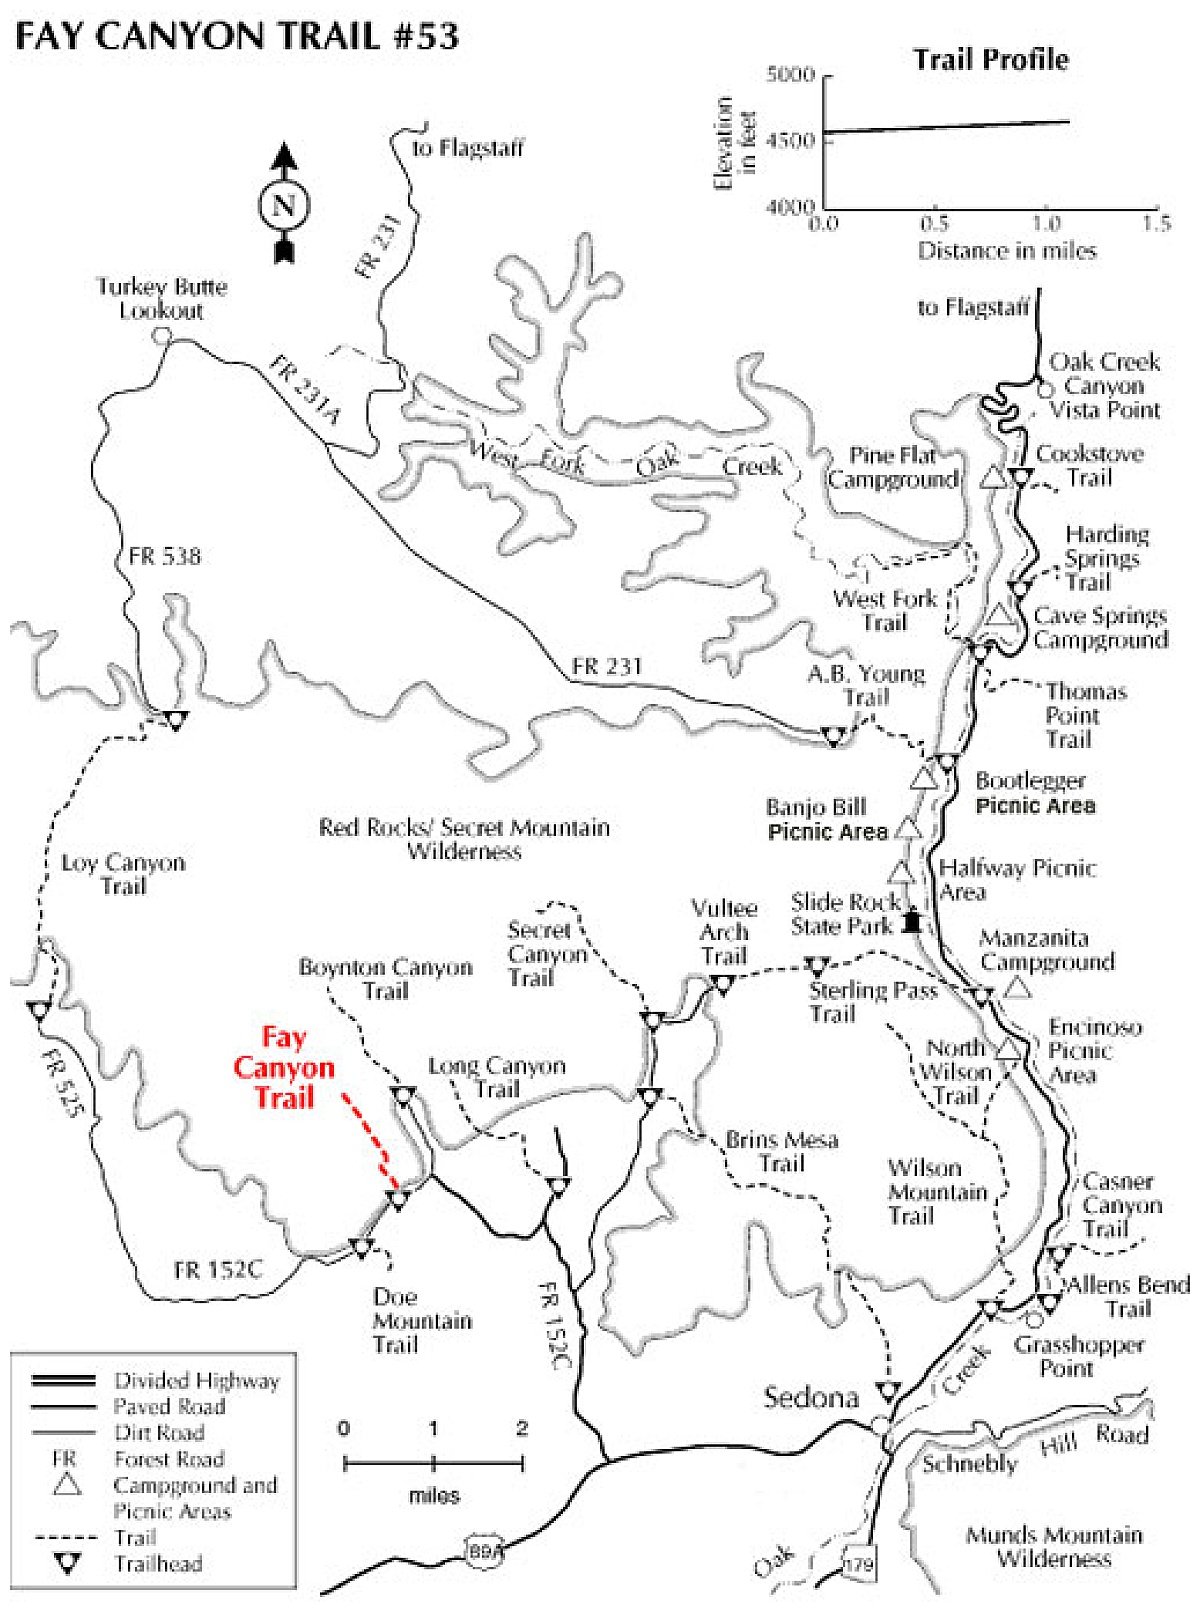 A map of the Fay Canyon trail in Sedona, Arizona.